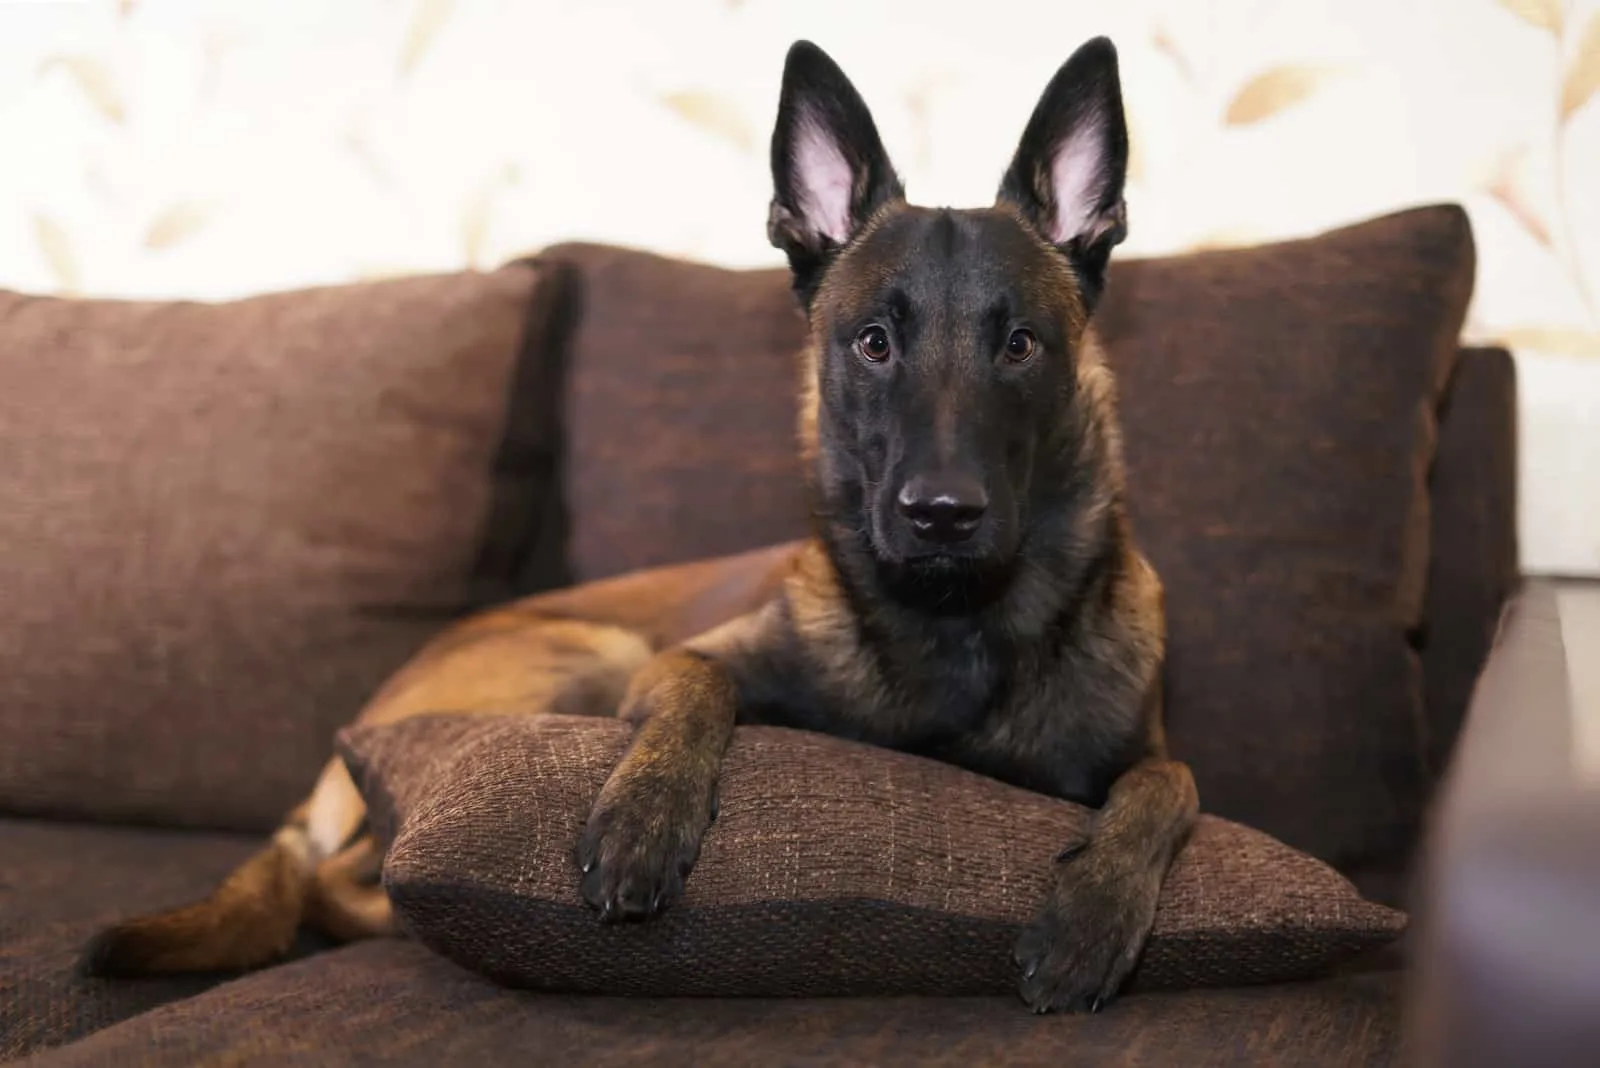  Belgian Shepherd dog Malinois lying indoors on a brown couch